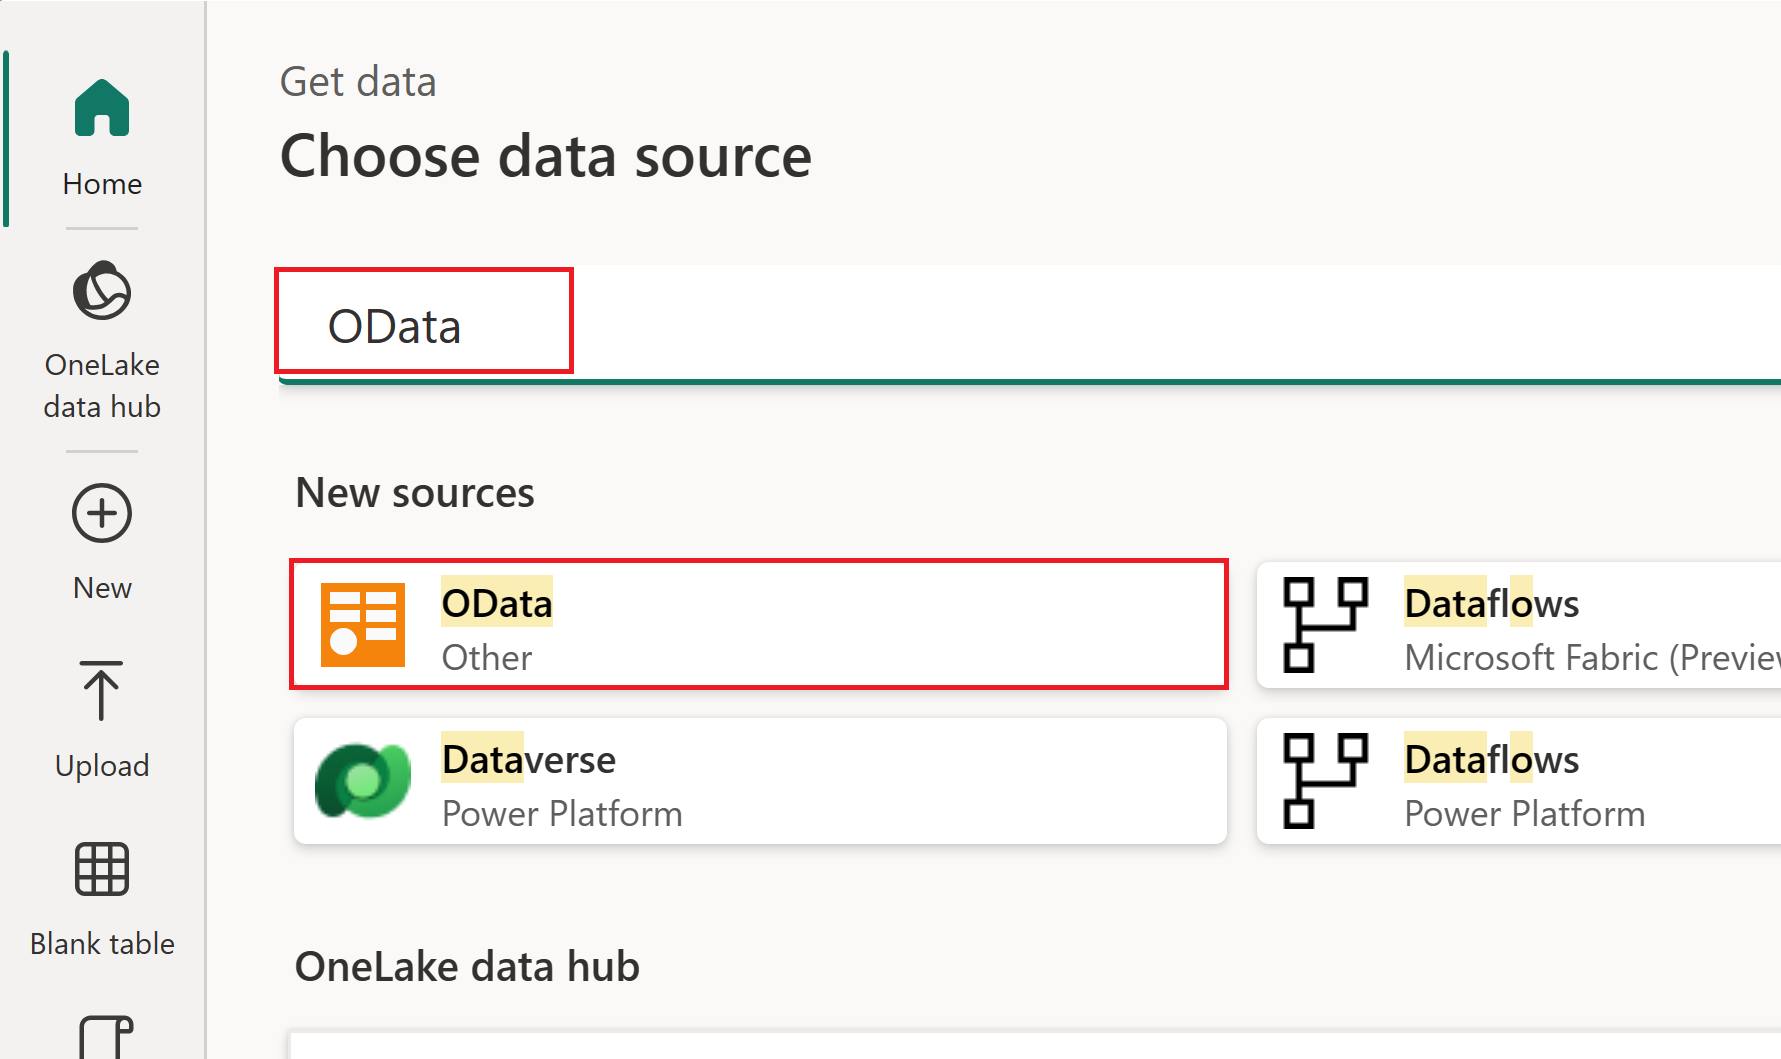 Screenshot of the Get data menu with OData emphasized